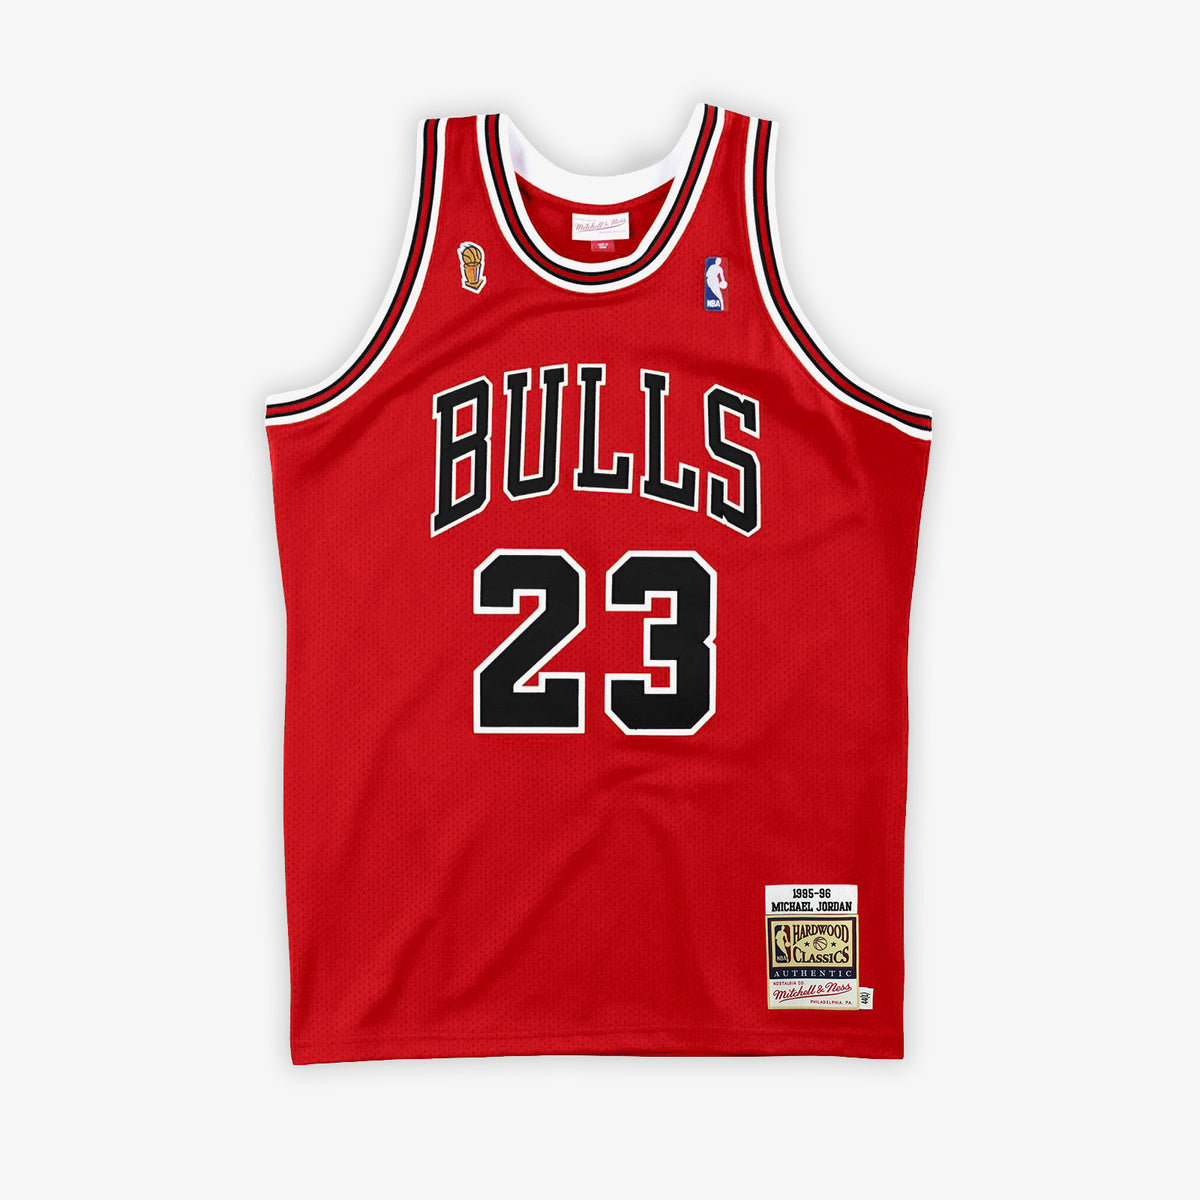 Michael Jordan Chicago Bulls NBA Finals jersey 1997